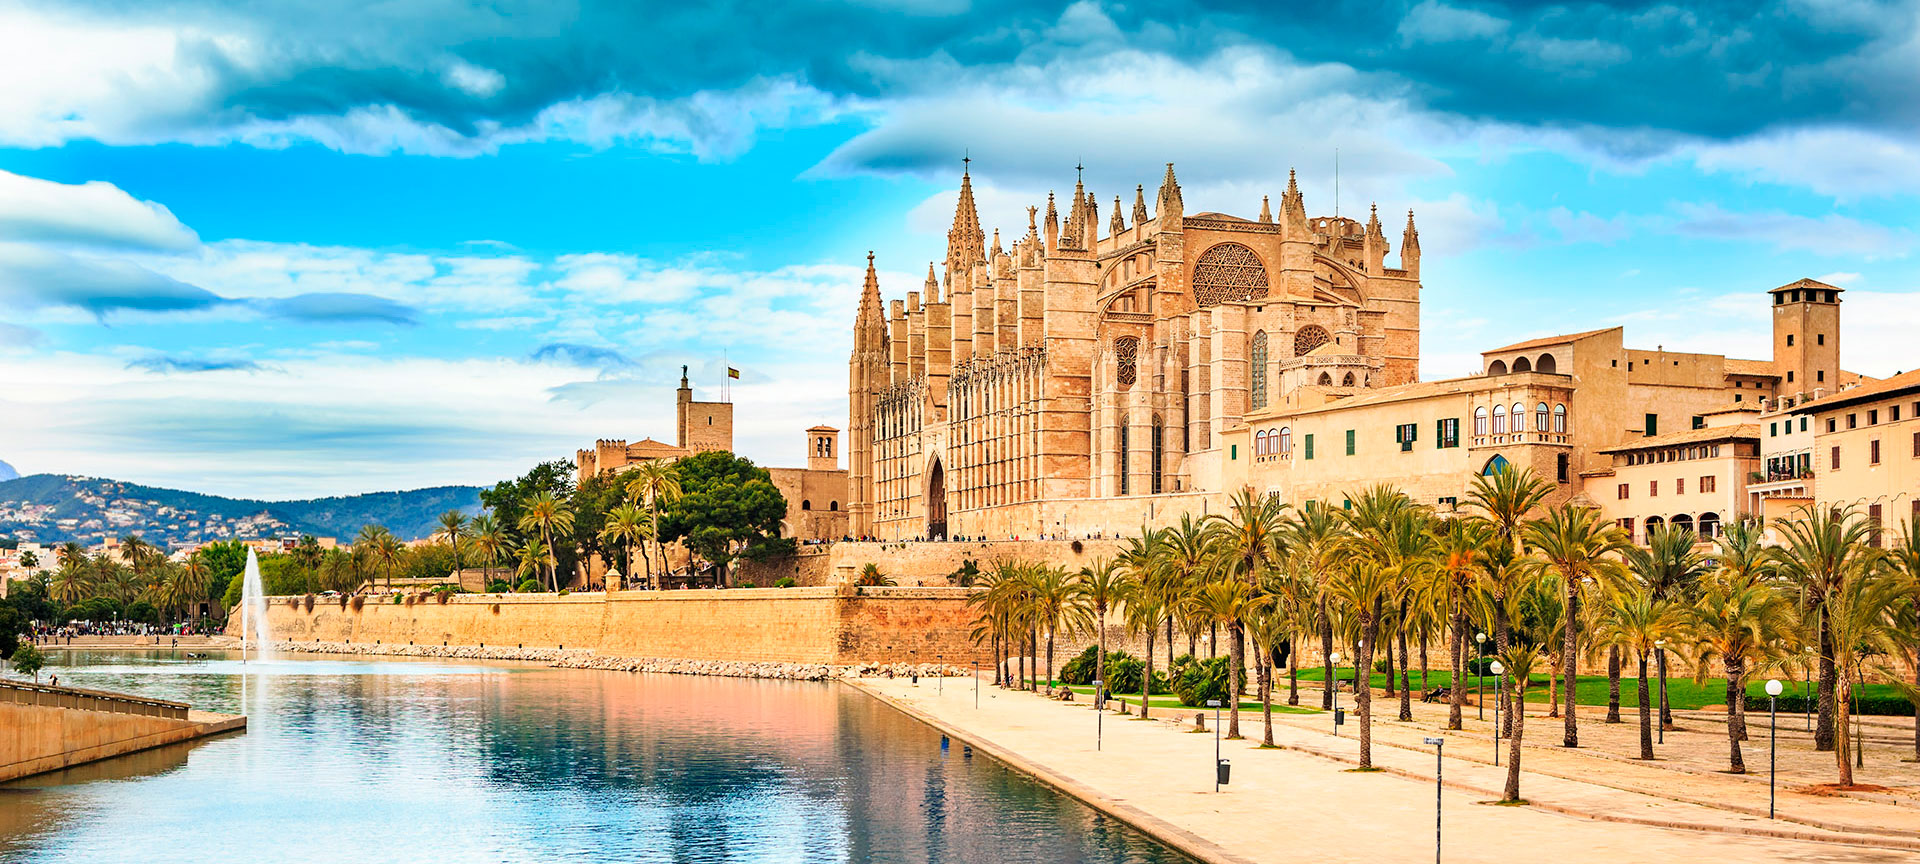 Cathedral of Palma de Mallorca (Balearic Islands).